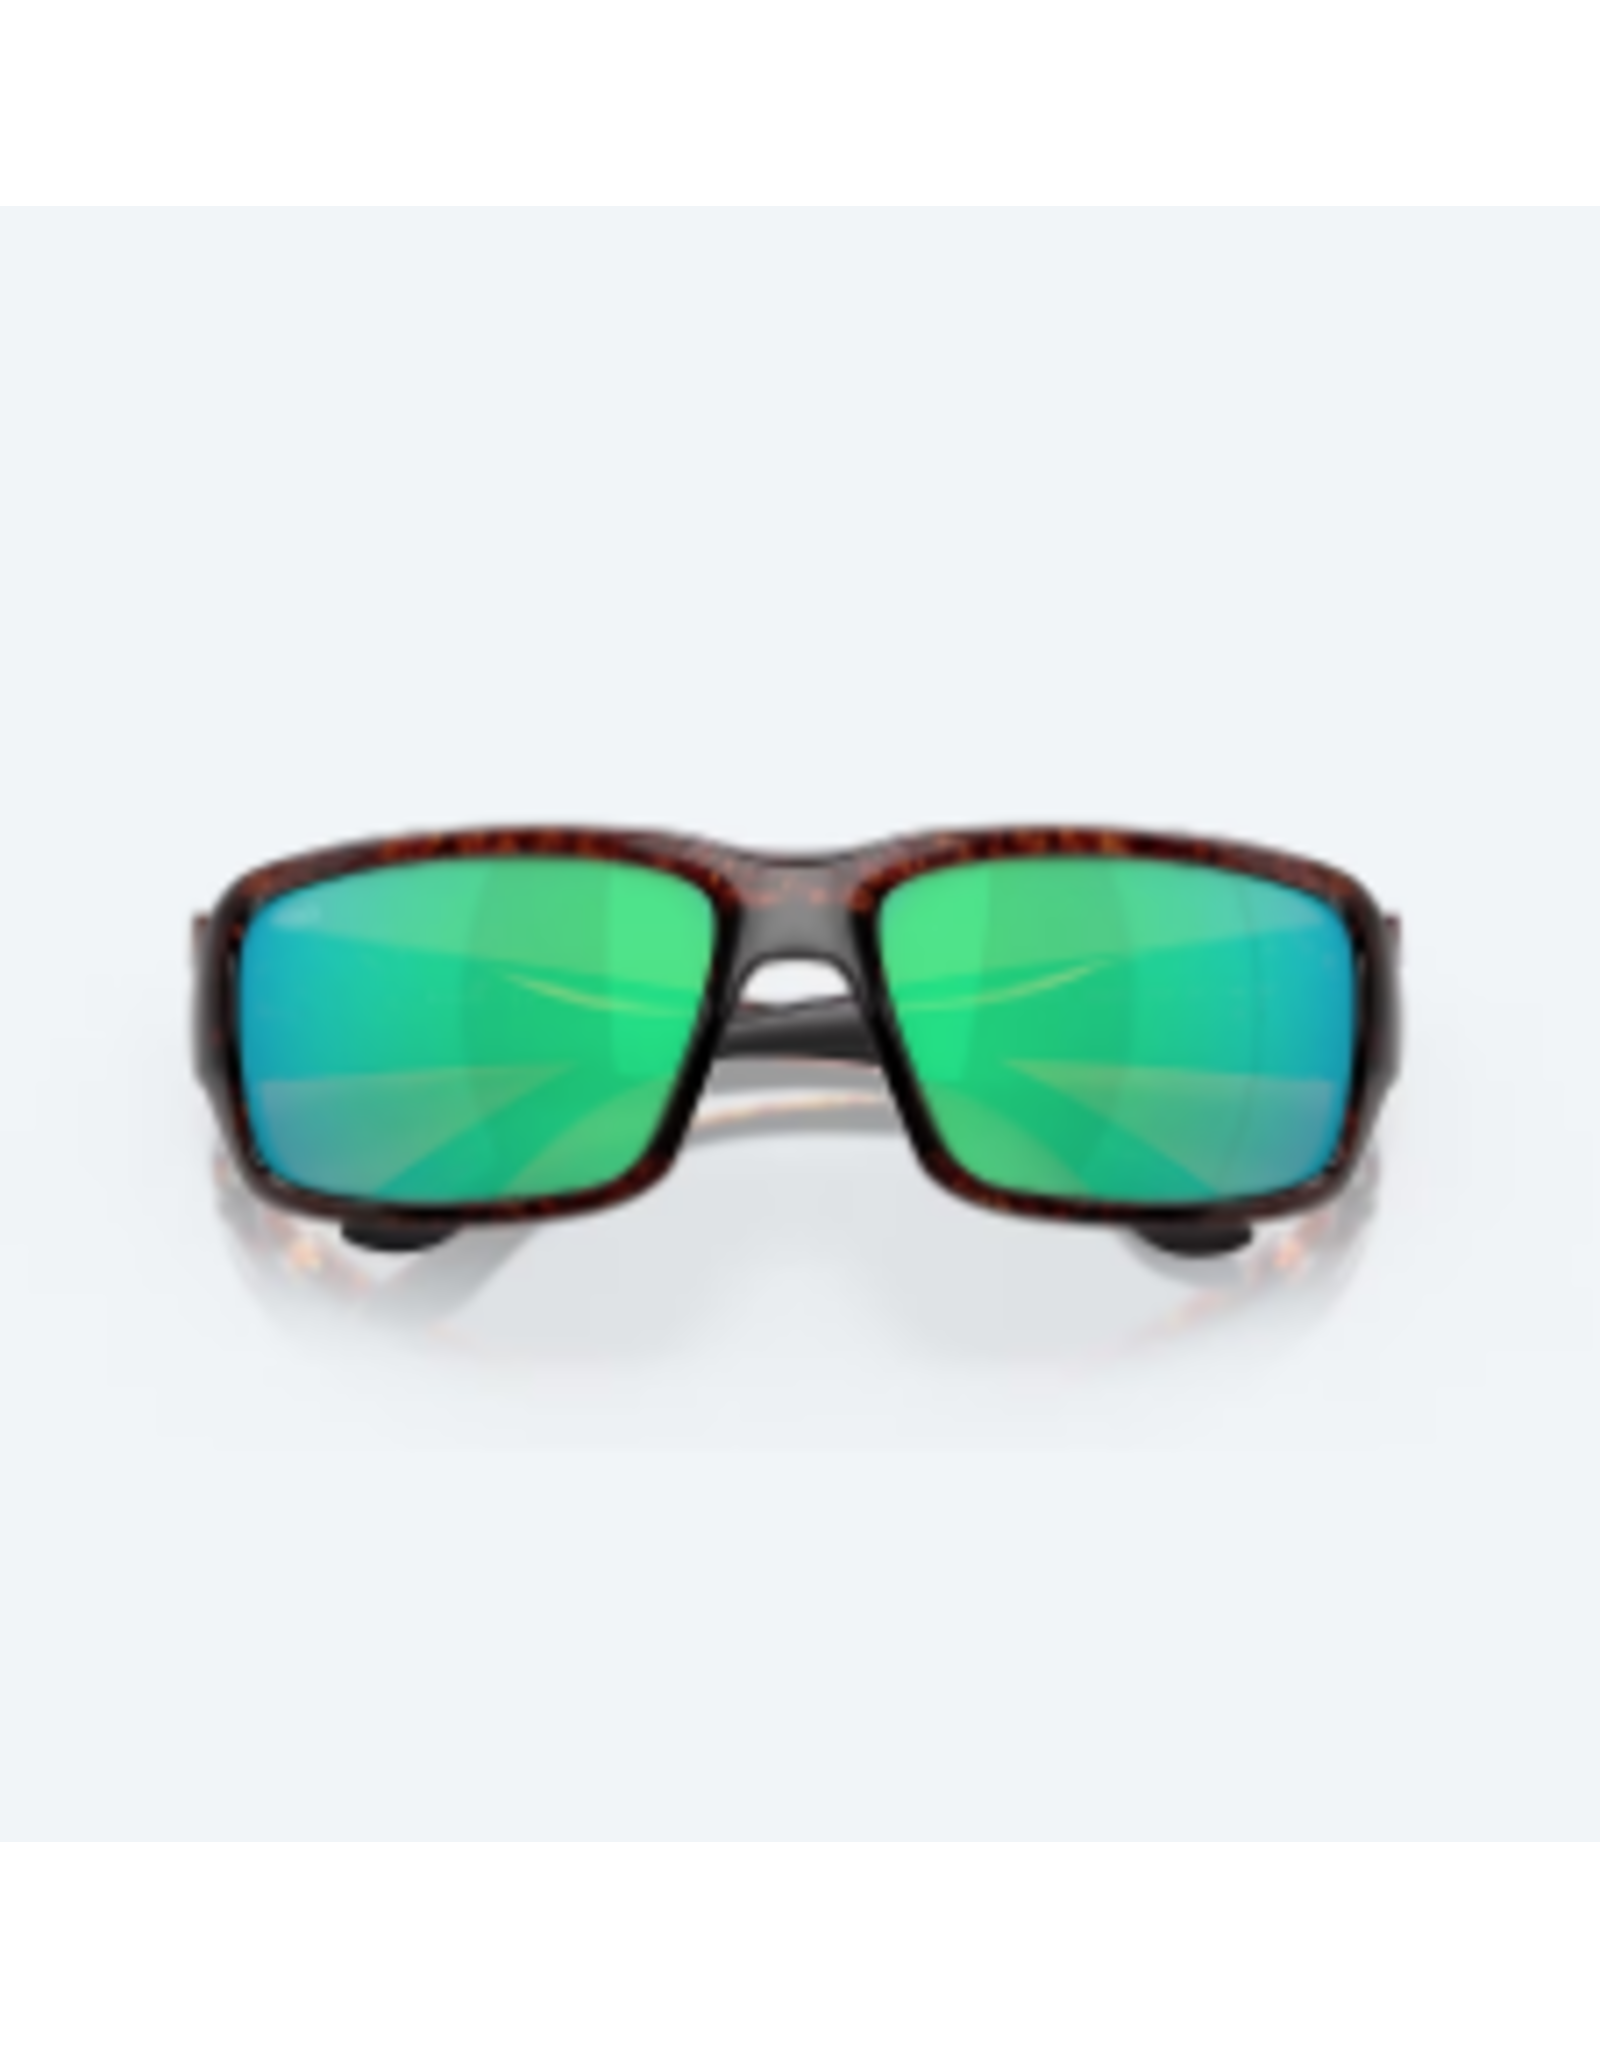 COSTA DEL MAR FANTAIL Frame Color: Tortoise Lenses : Green Mirror Polarized Glass